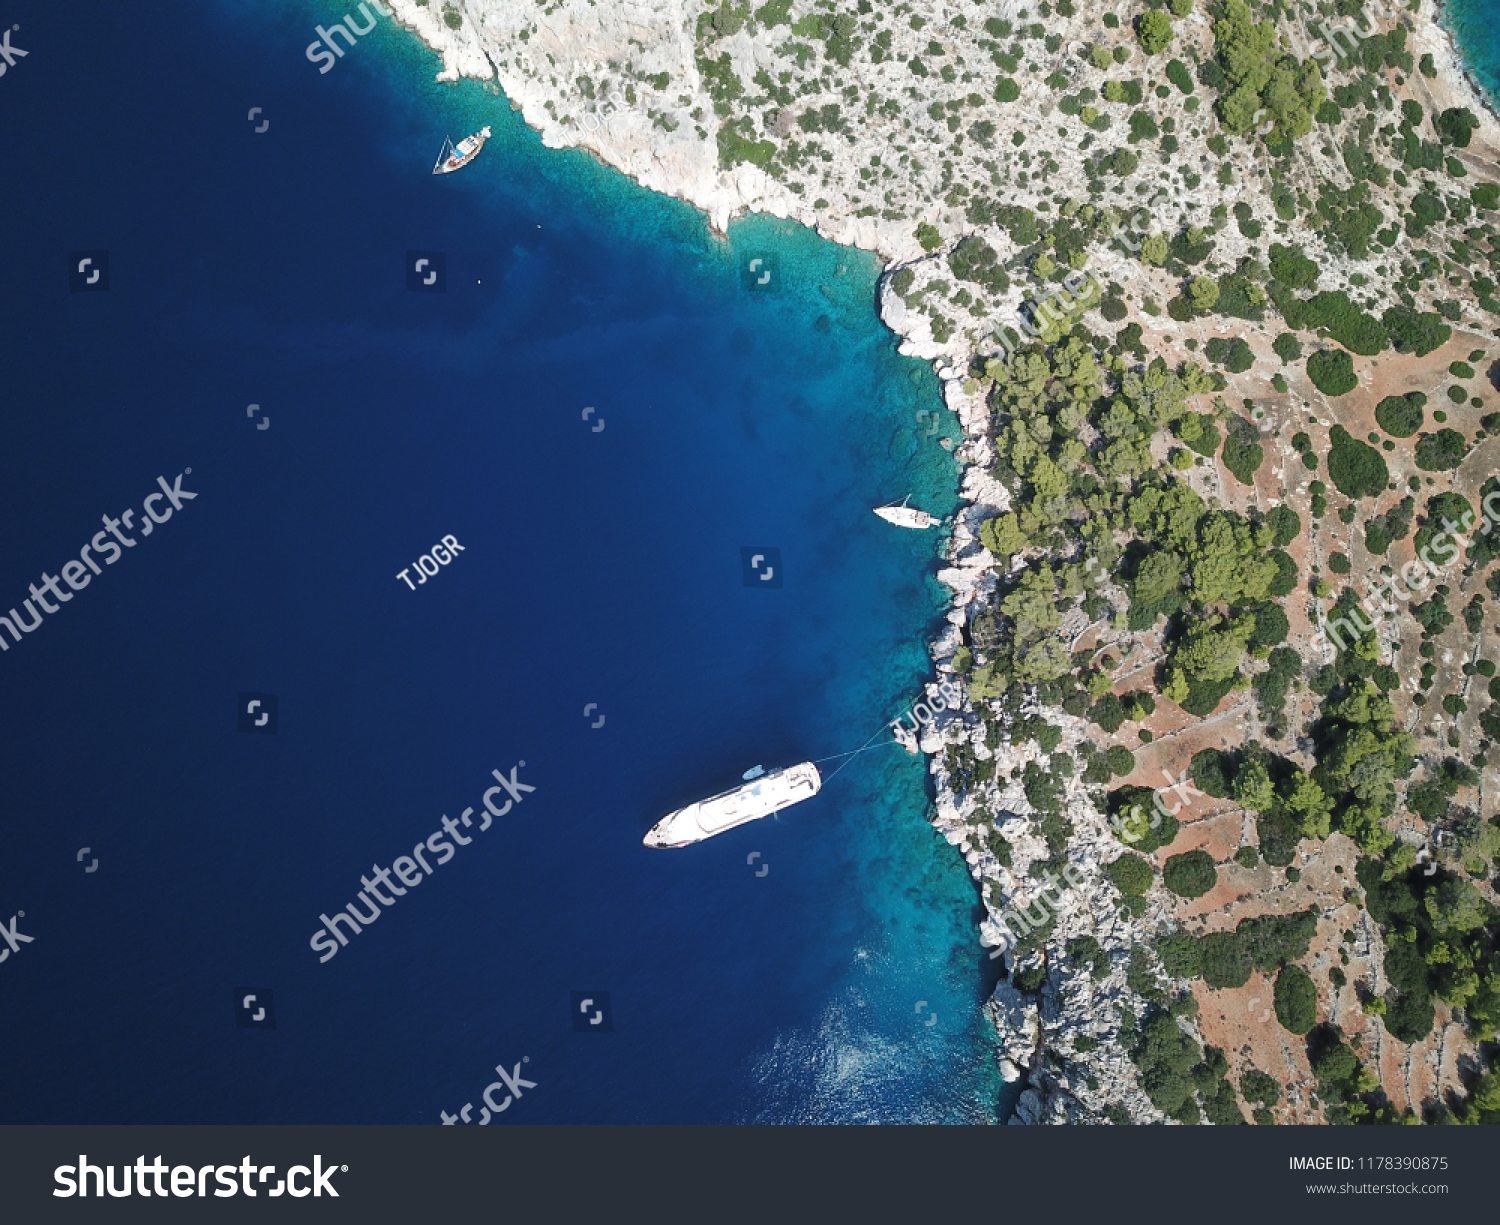 Greek Islands Drone Pictures Stock Photo 1178390875 | Shutterstock